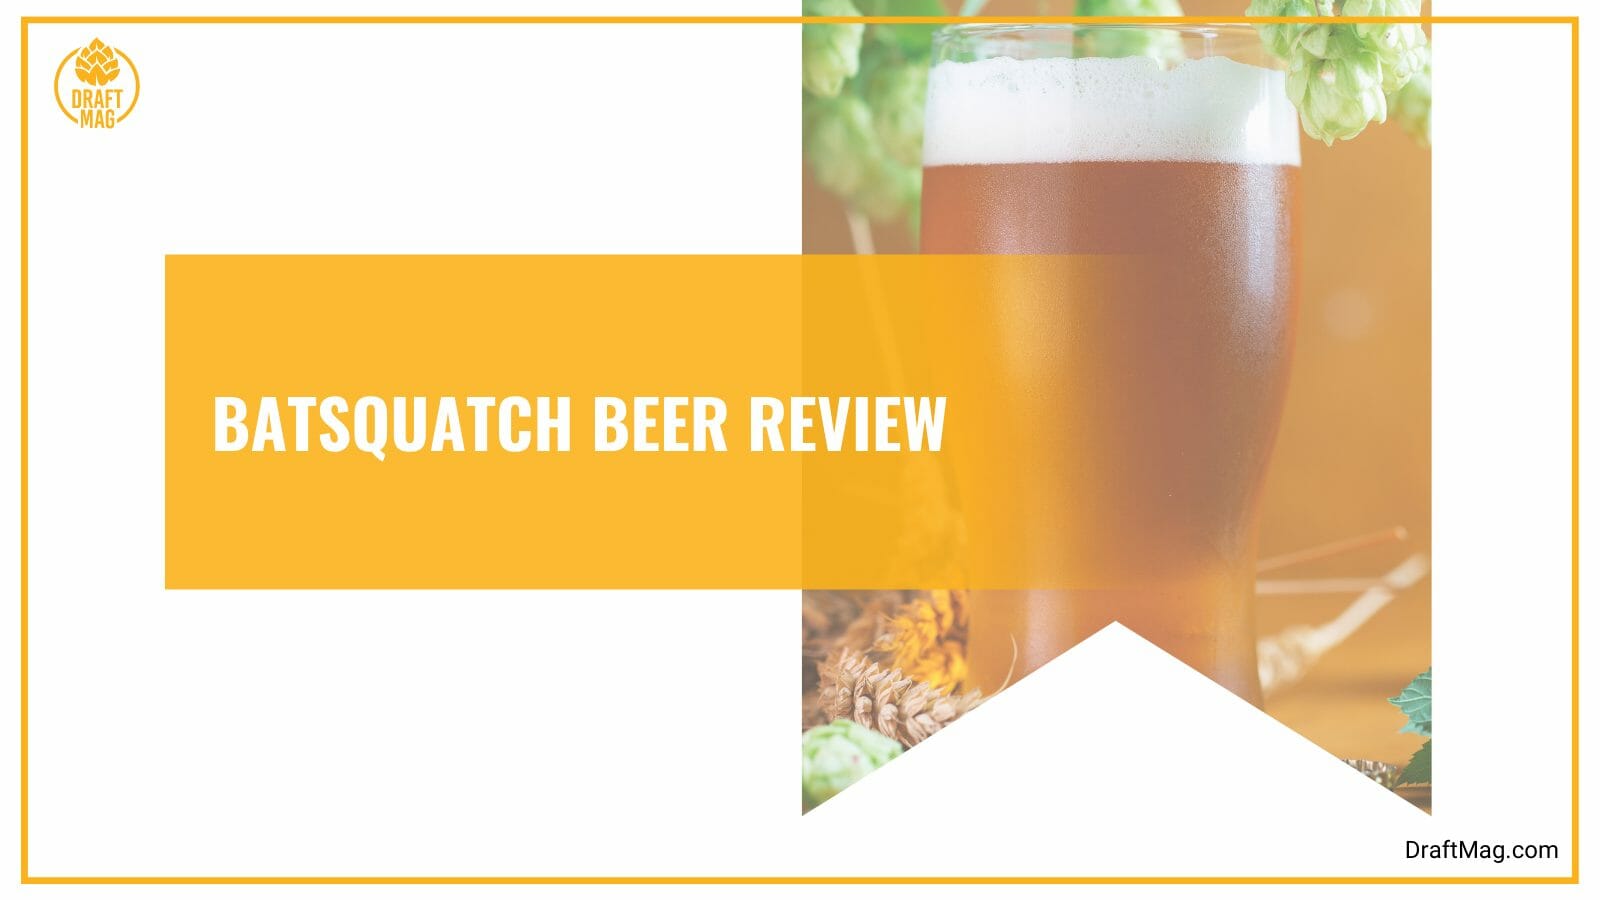 Batsquatch beer guide